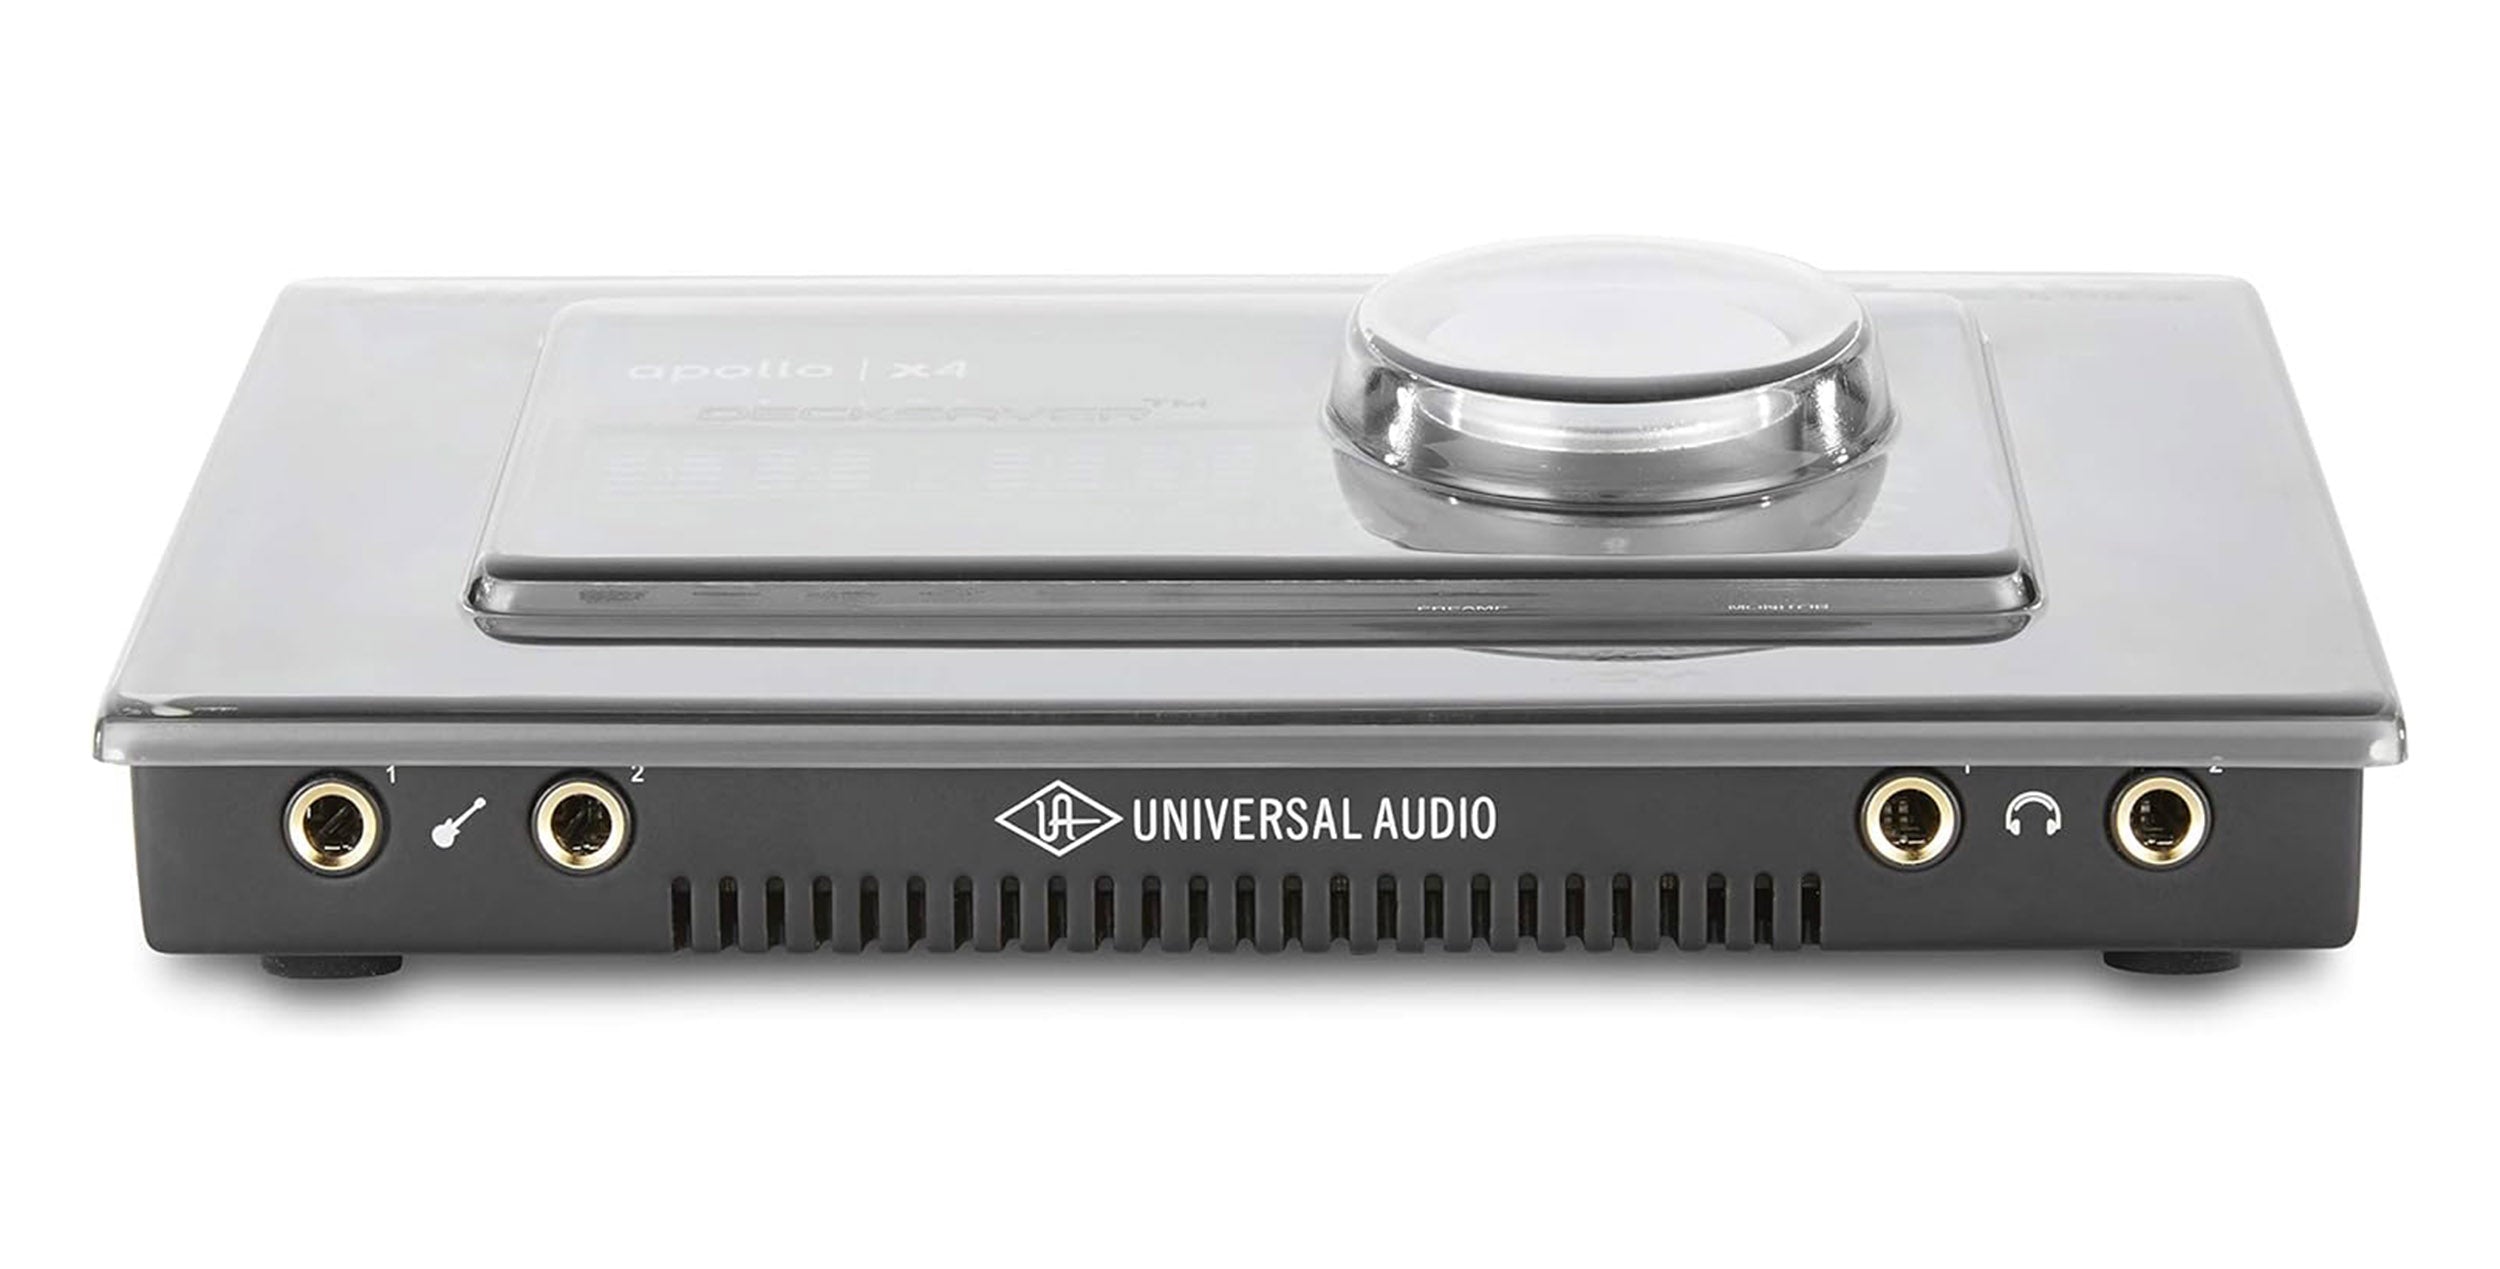 Decksaver DS-PC-APOLLOX4 Protection Cover for Universal Audio Apollo X4 Audio Interface - Hollywood DJ